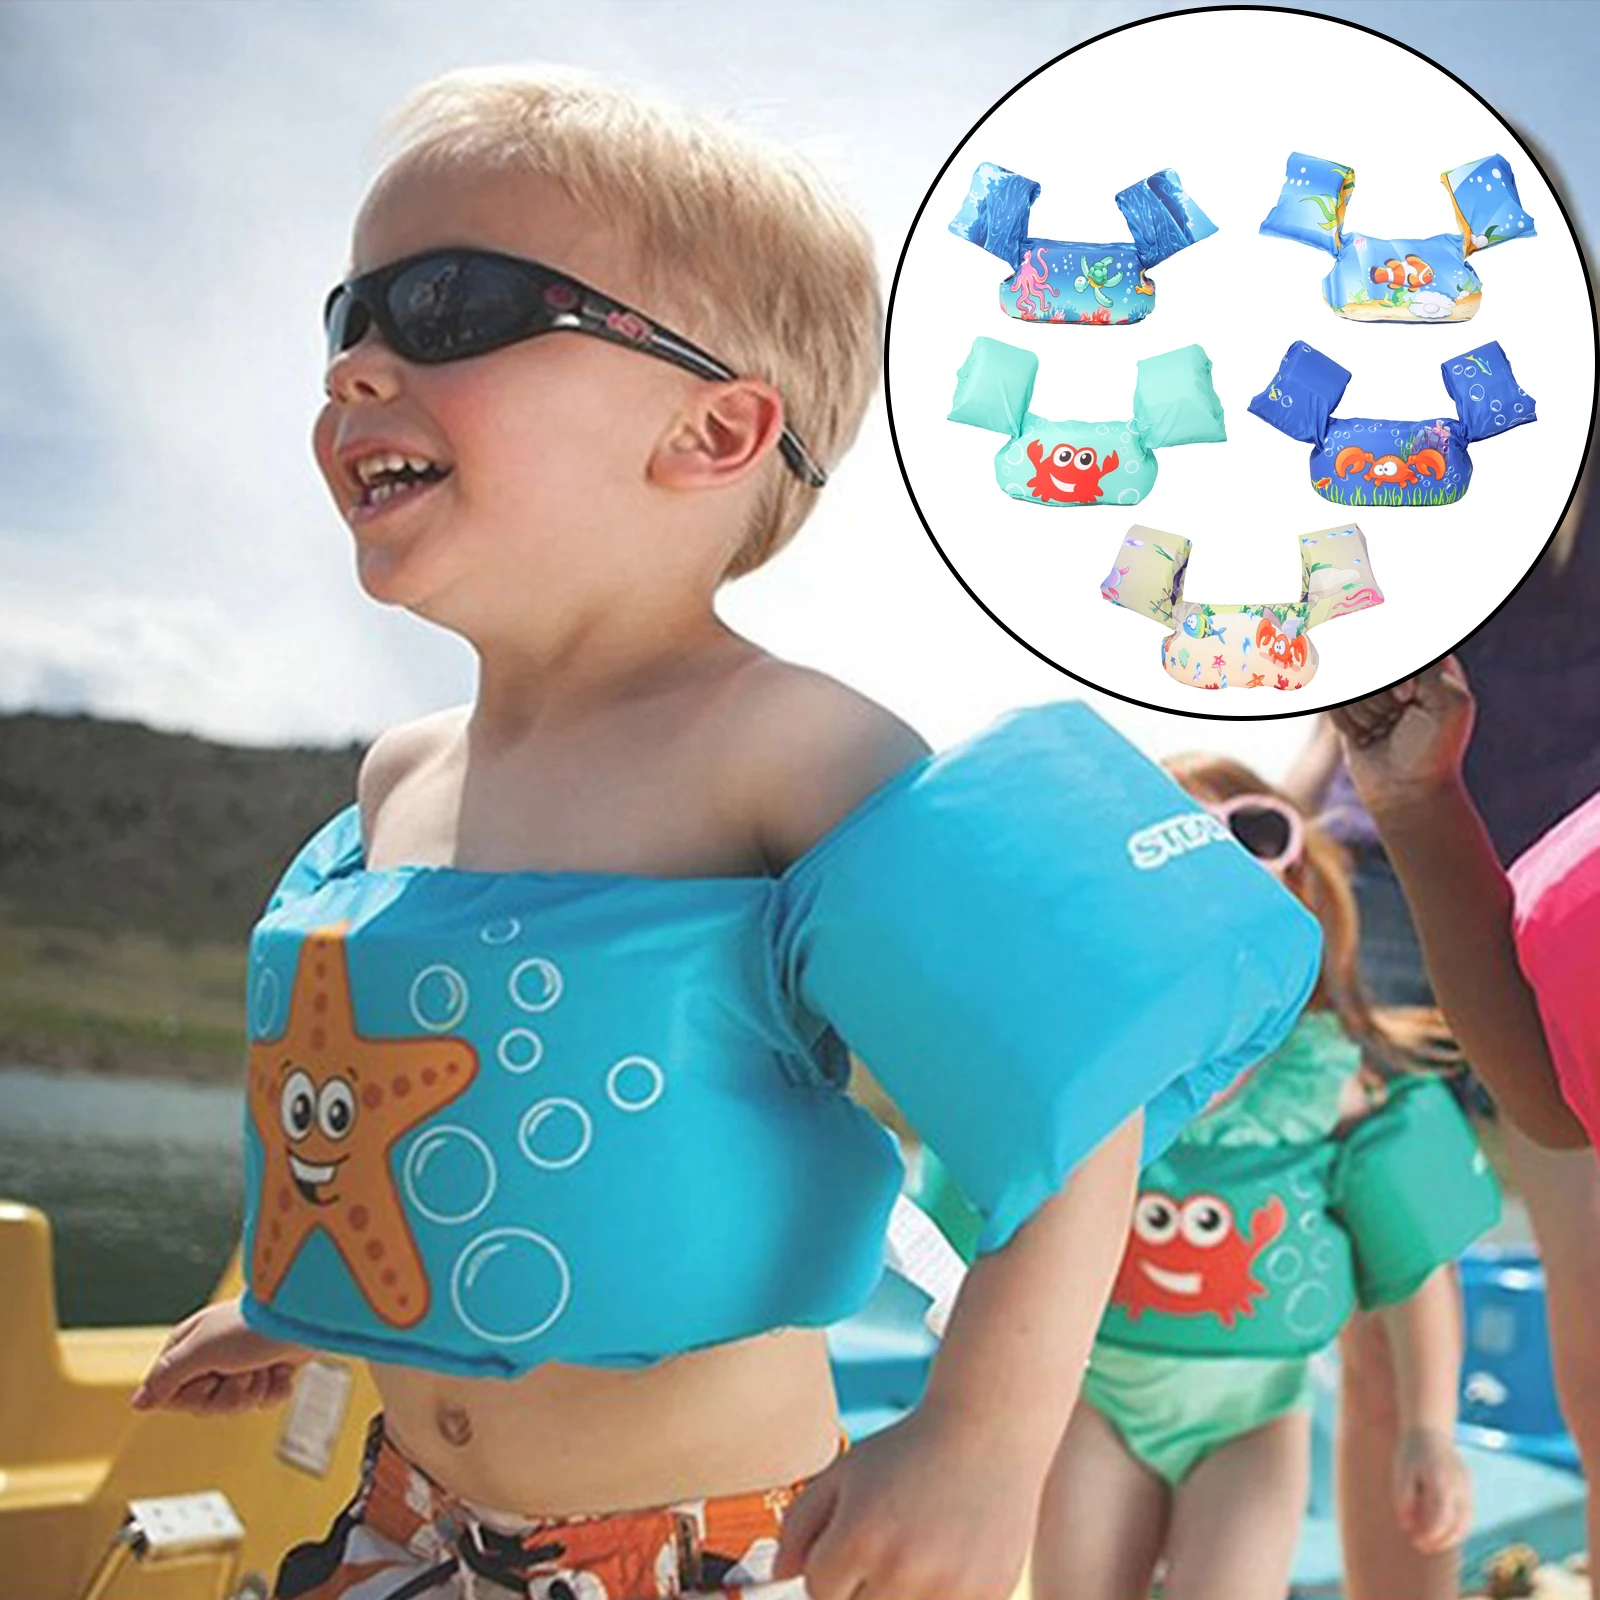 

Baby Kids Swimming Floats Premium Swim Floating Rings Armbands Boys Girls Safety Arm Band Buoy Floater Tube Safety Gear Jacket